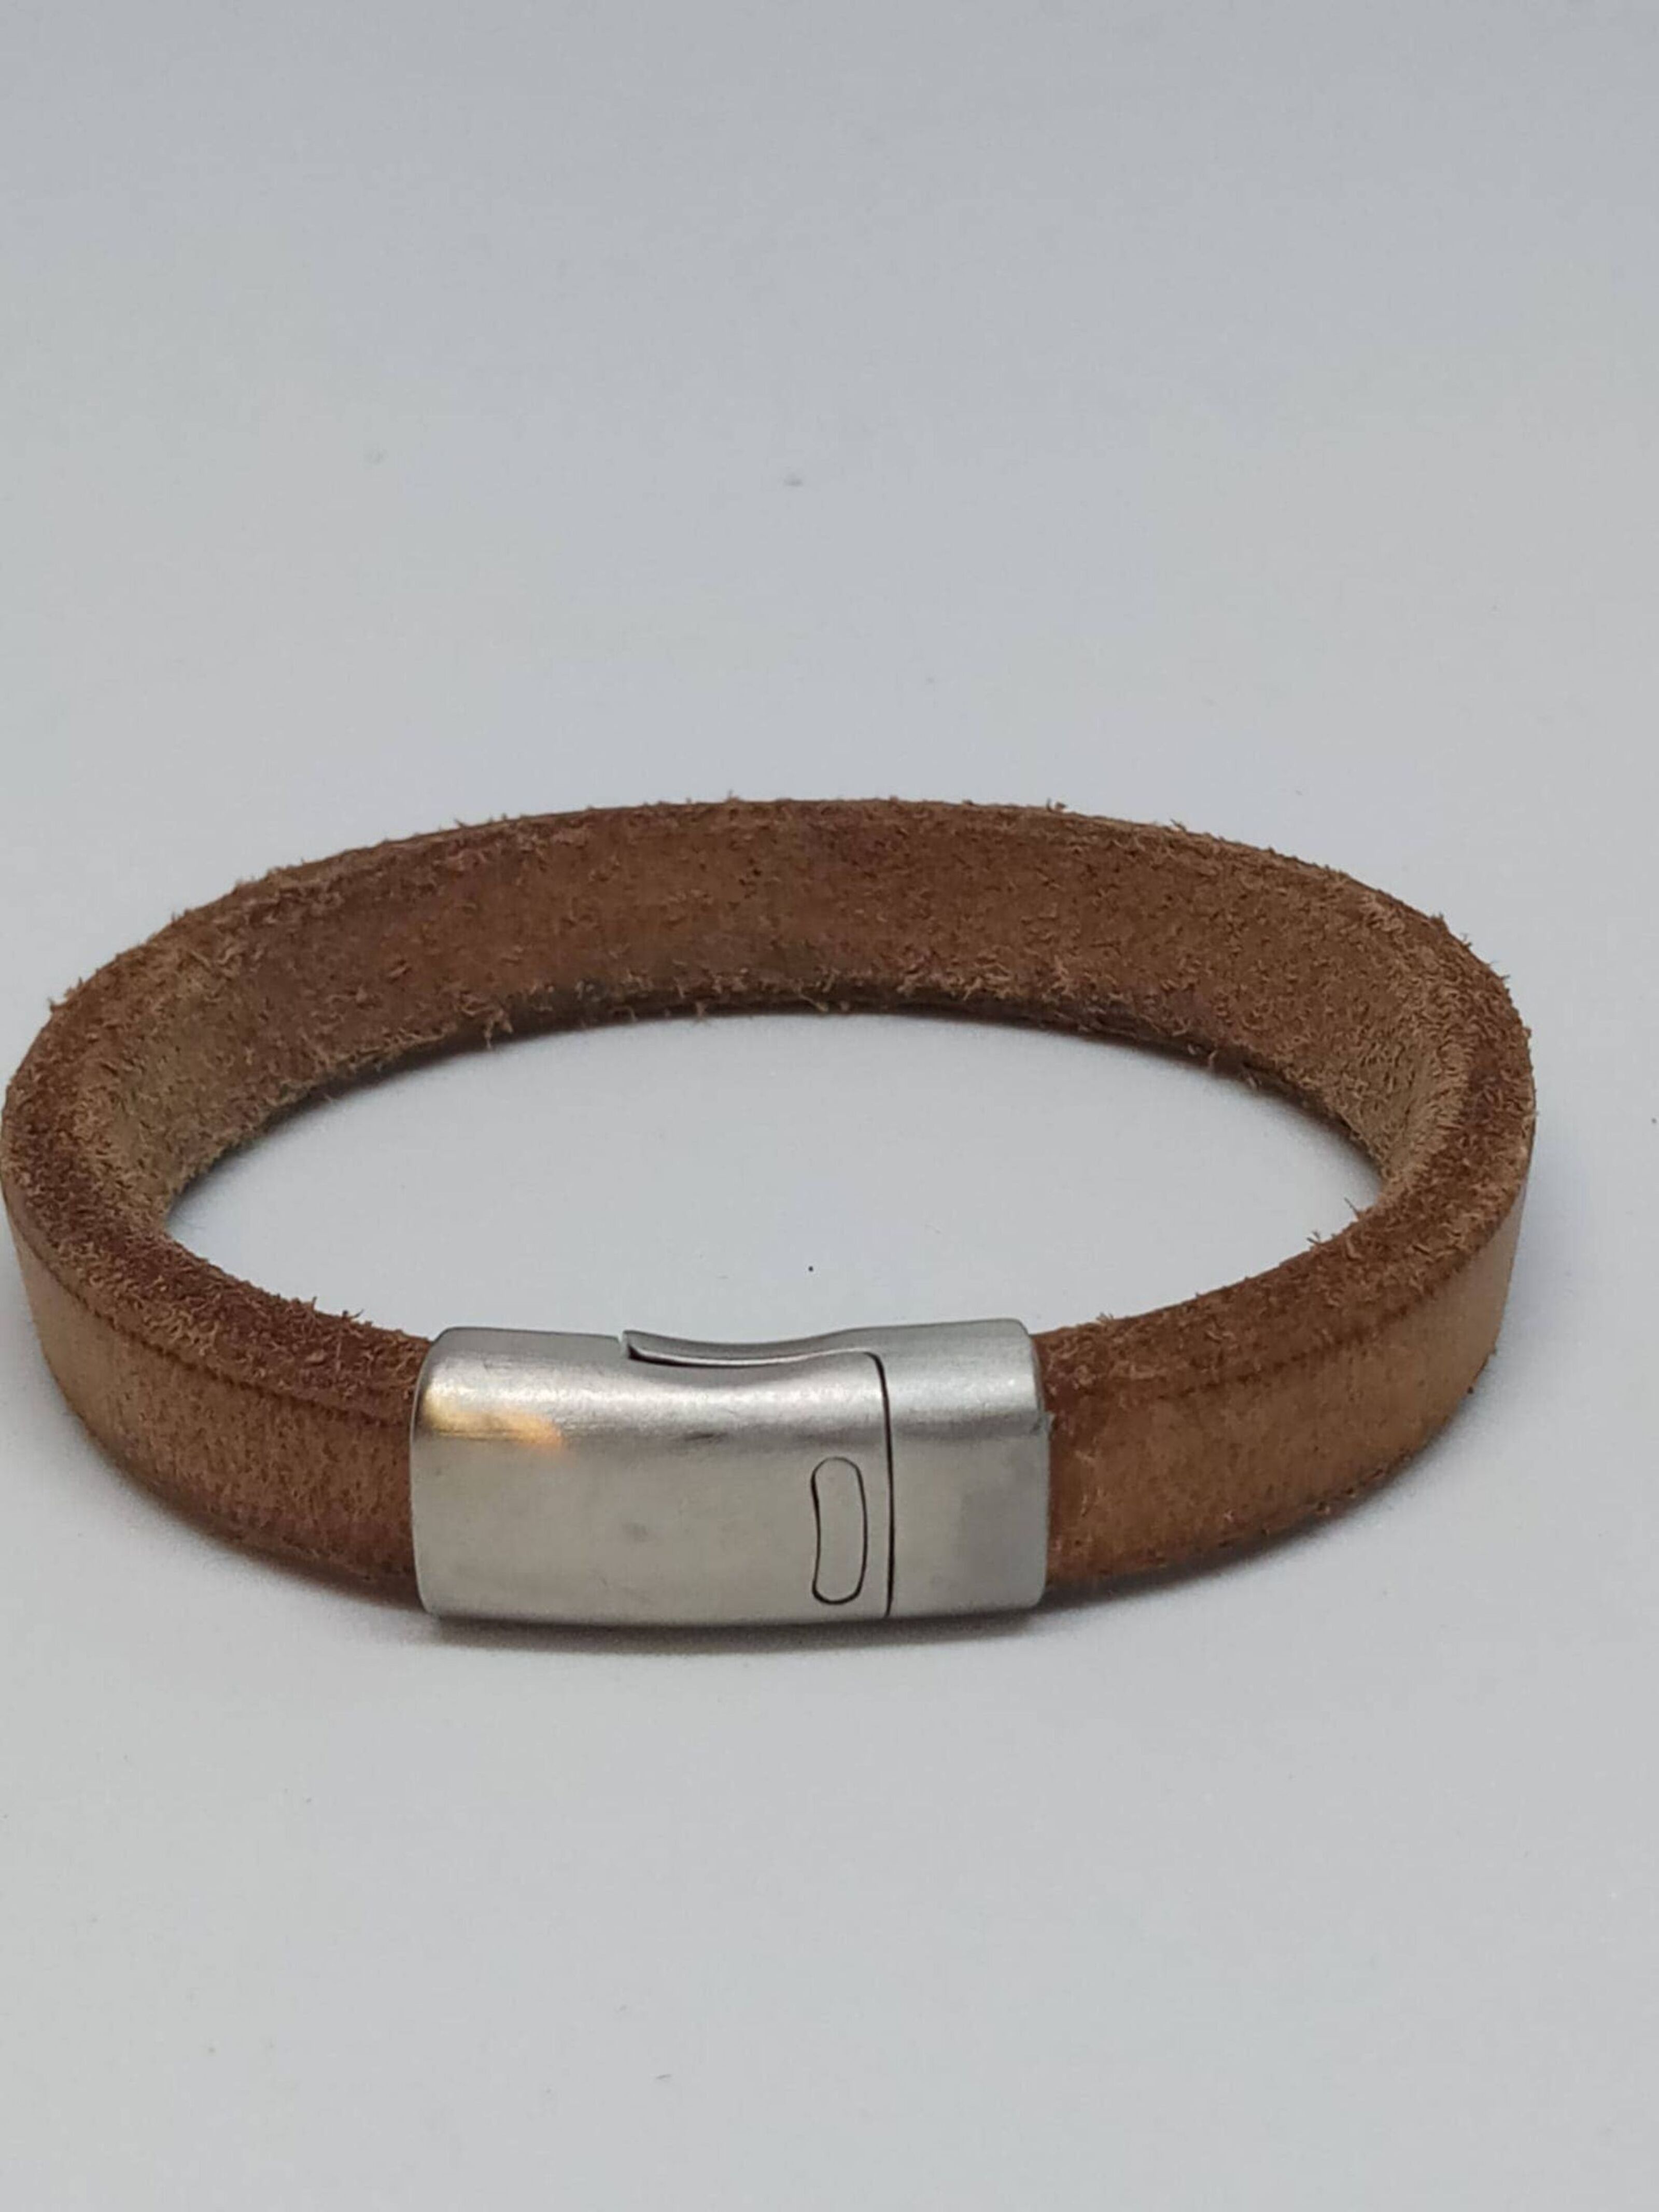 LogoArt Michigan (University of) Small Center Leather Bracelet